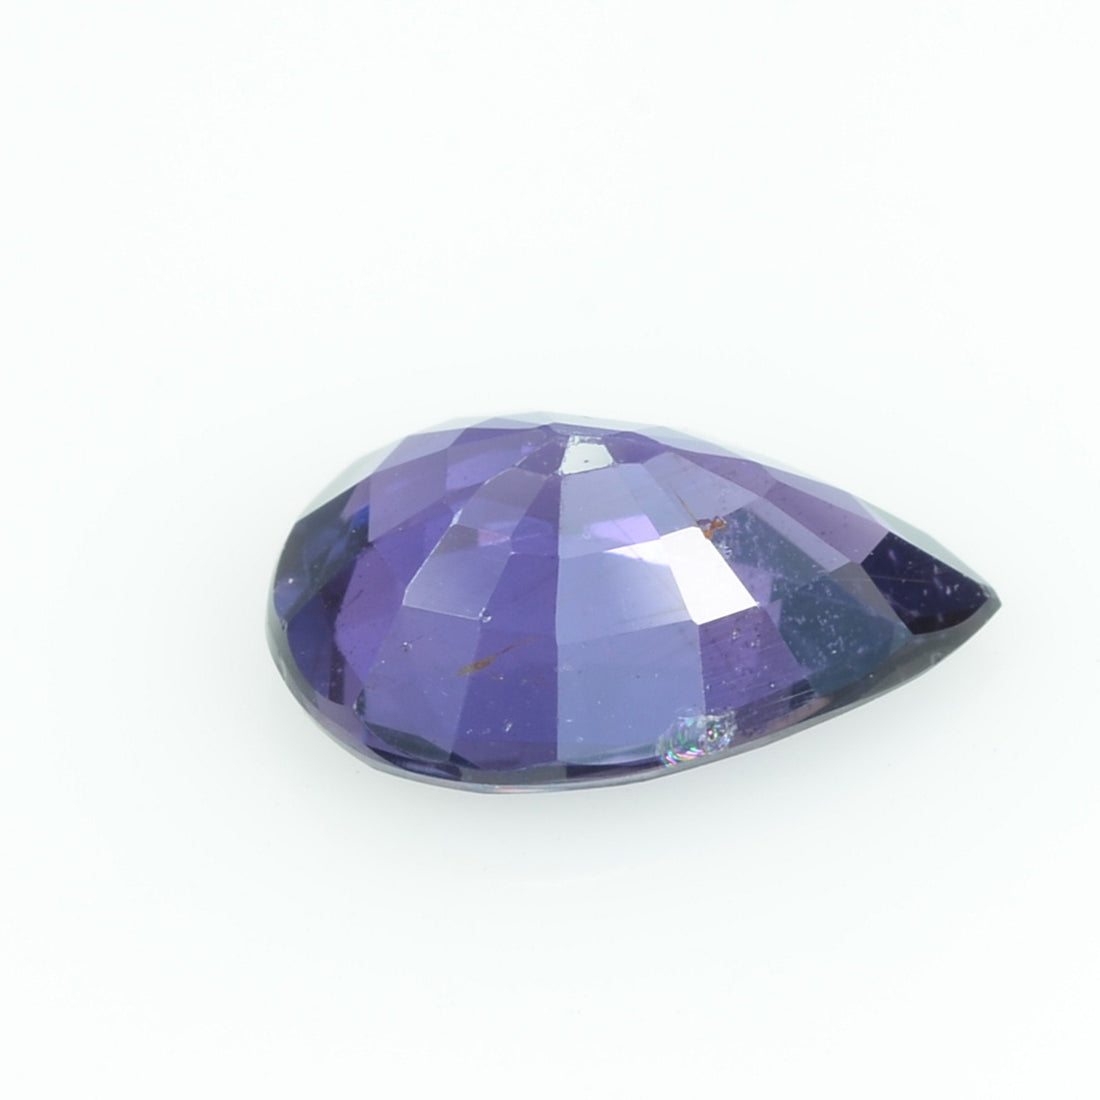 2.16 cts Natural Purple Sapphire Loose Gemstone Pear Cut